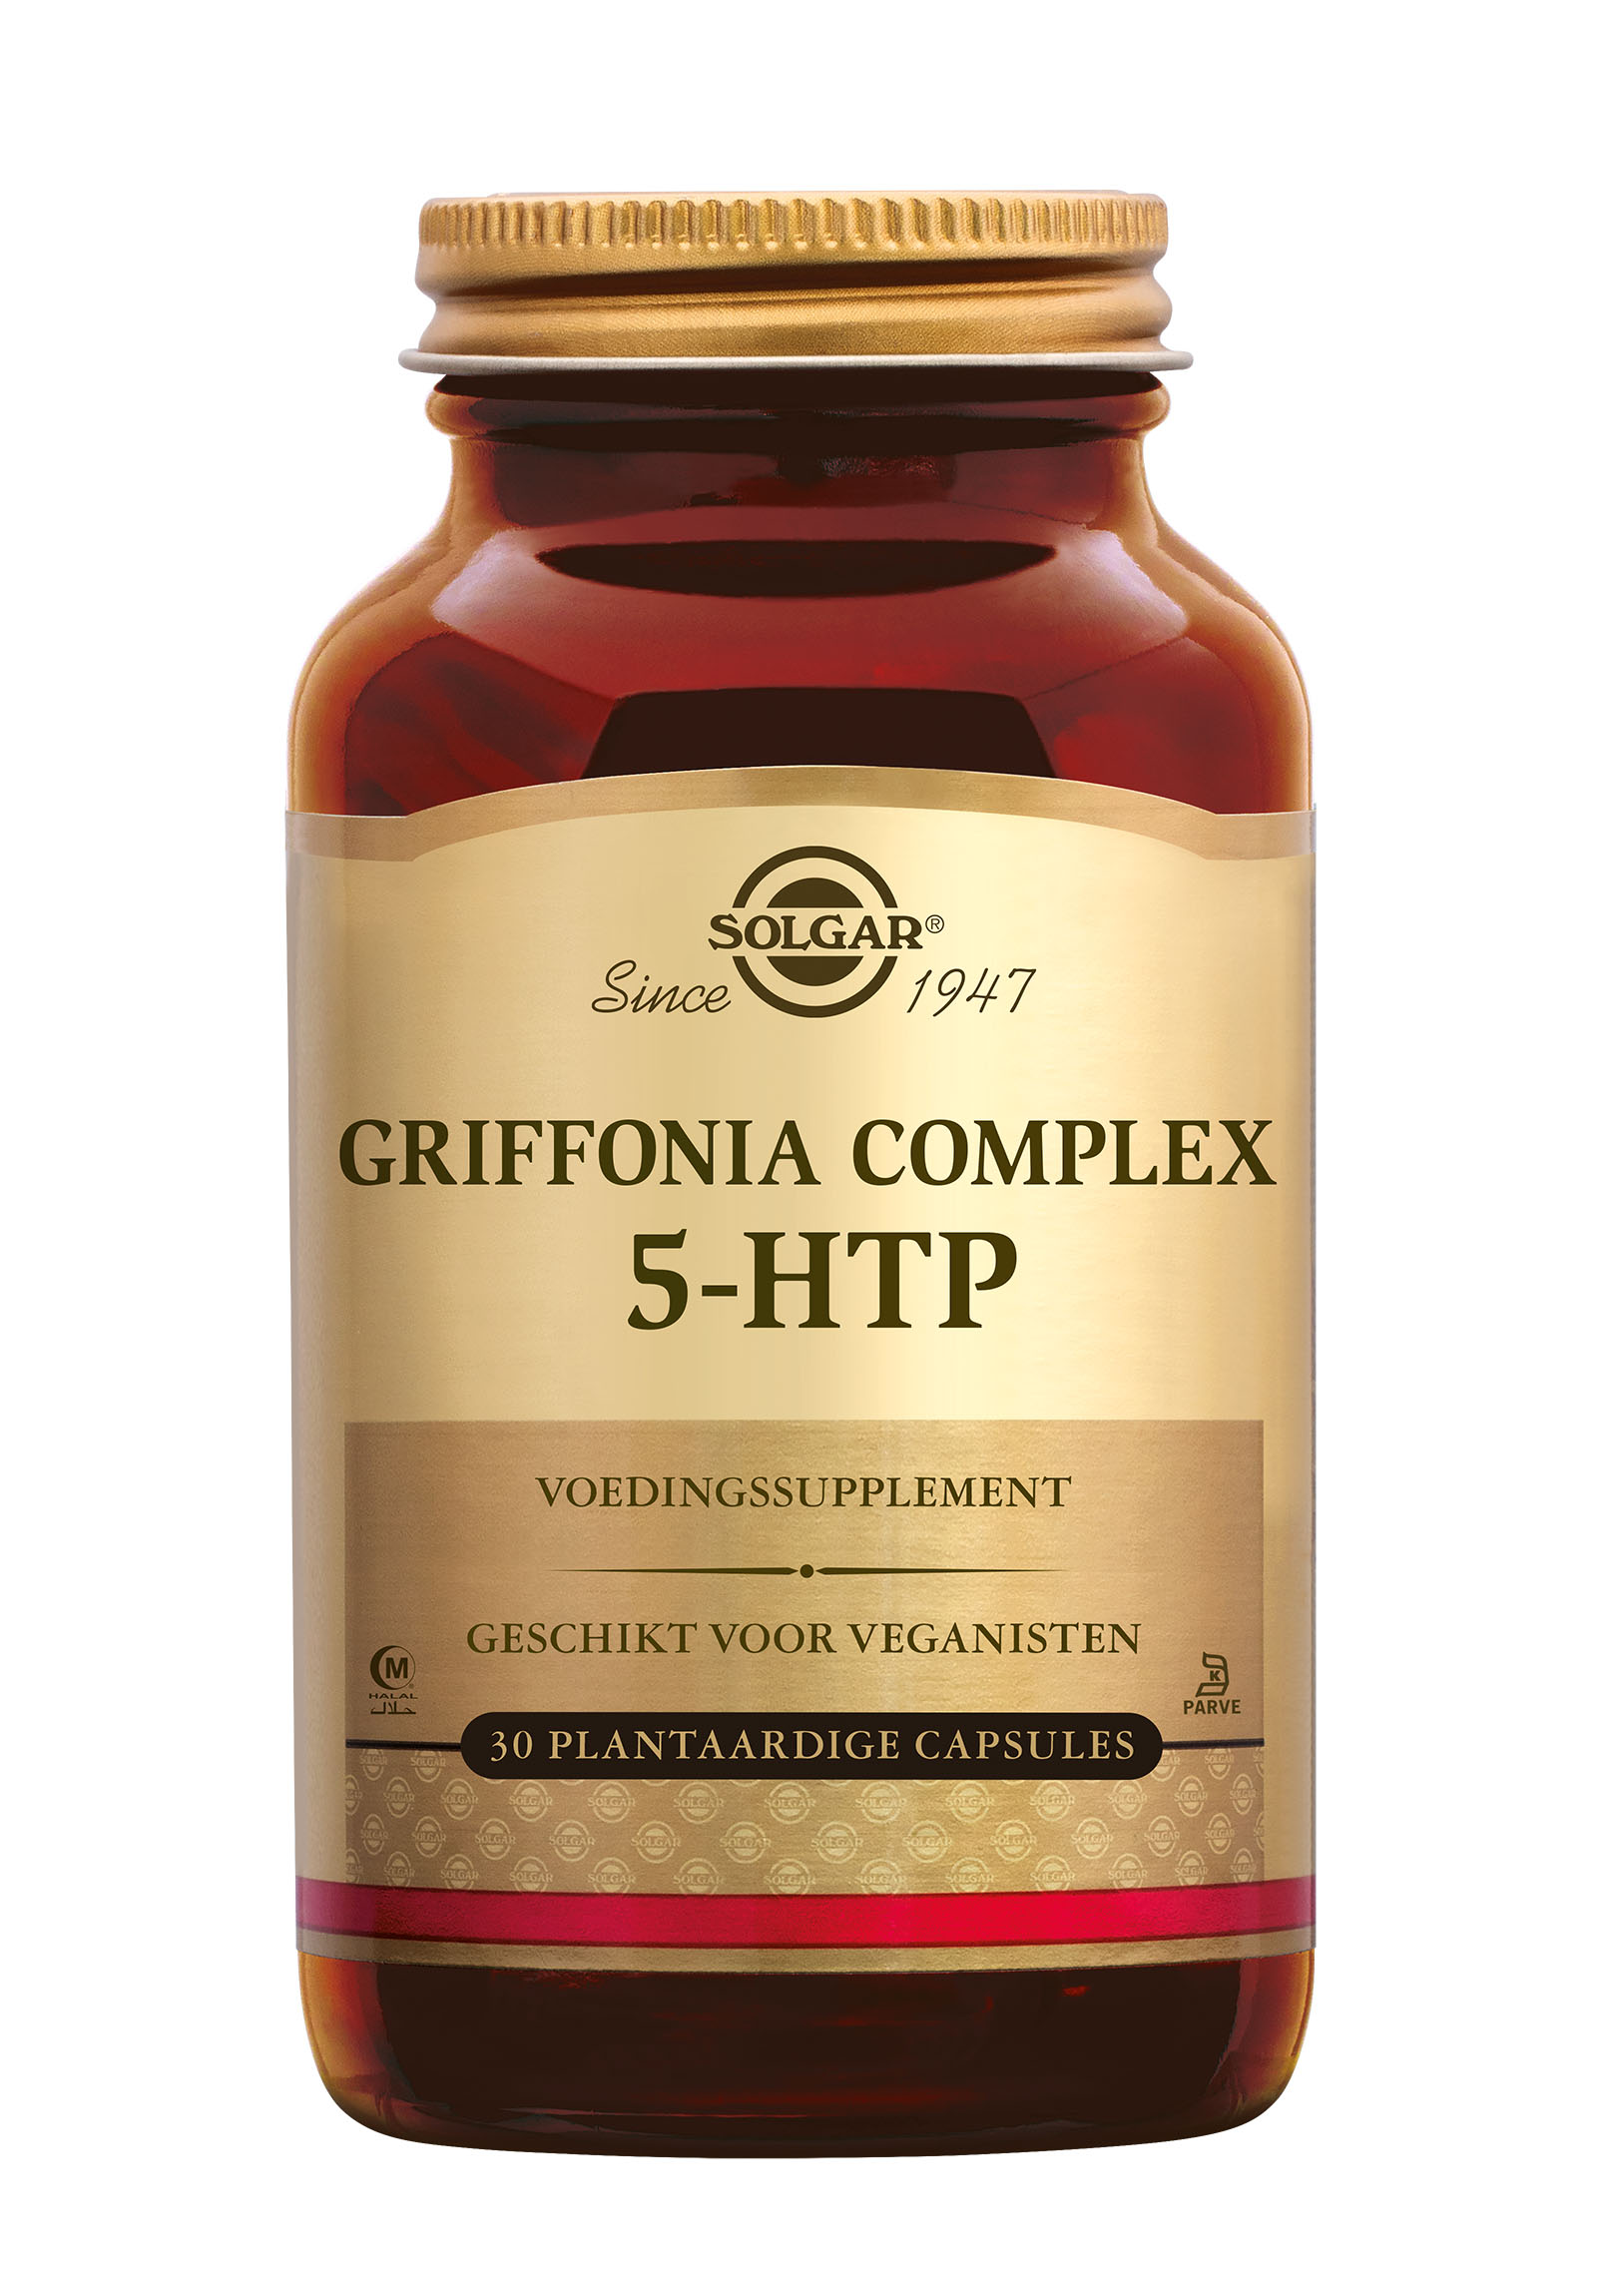 Solgar Griffonia Complex 5-HTP (30 stuks)